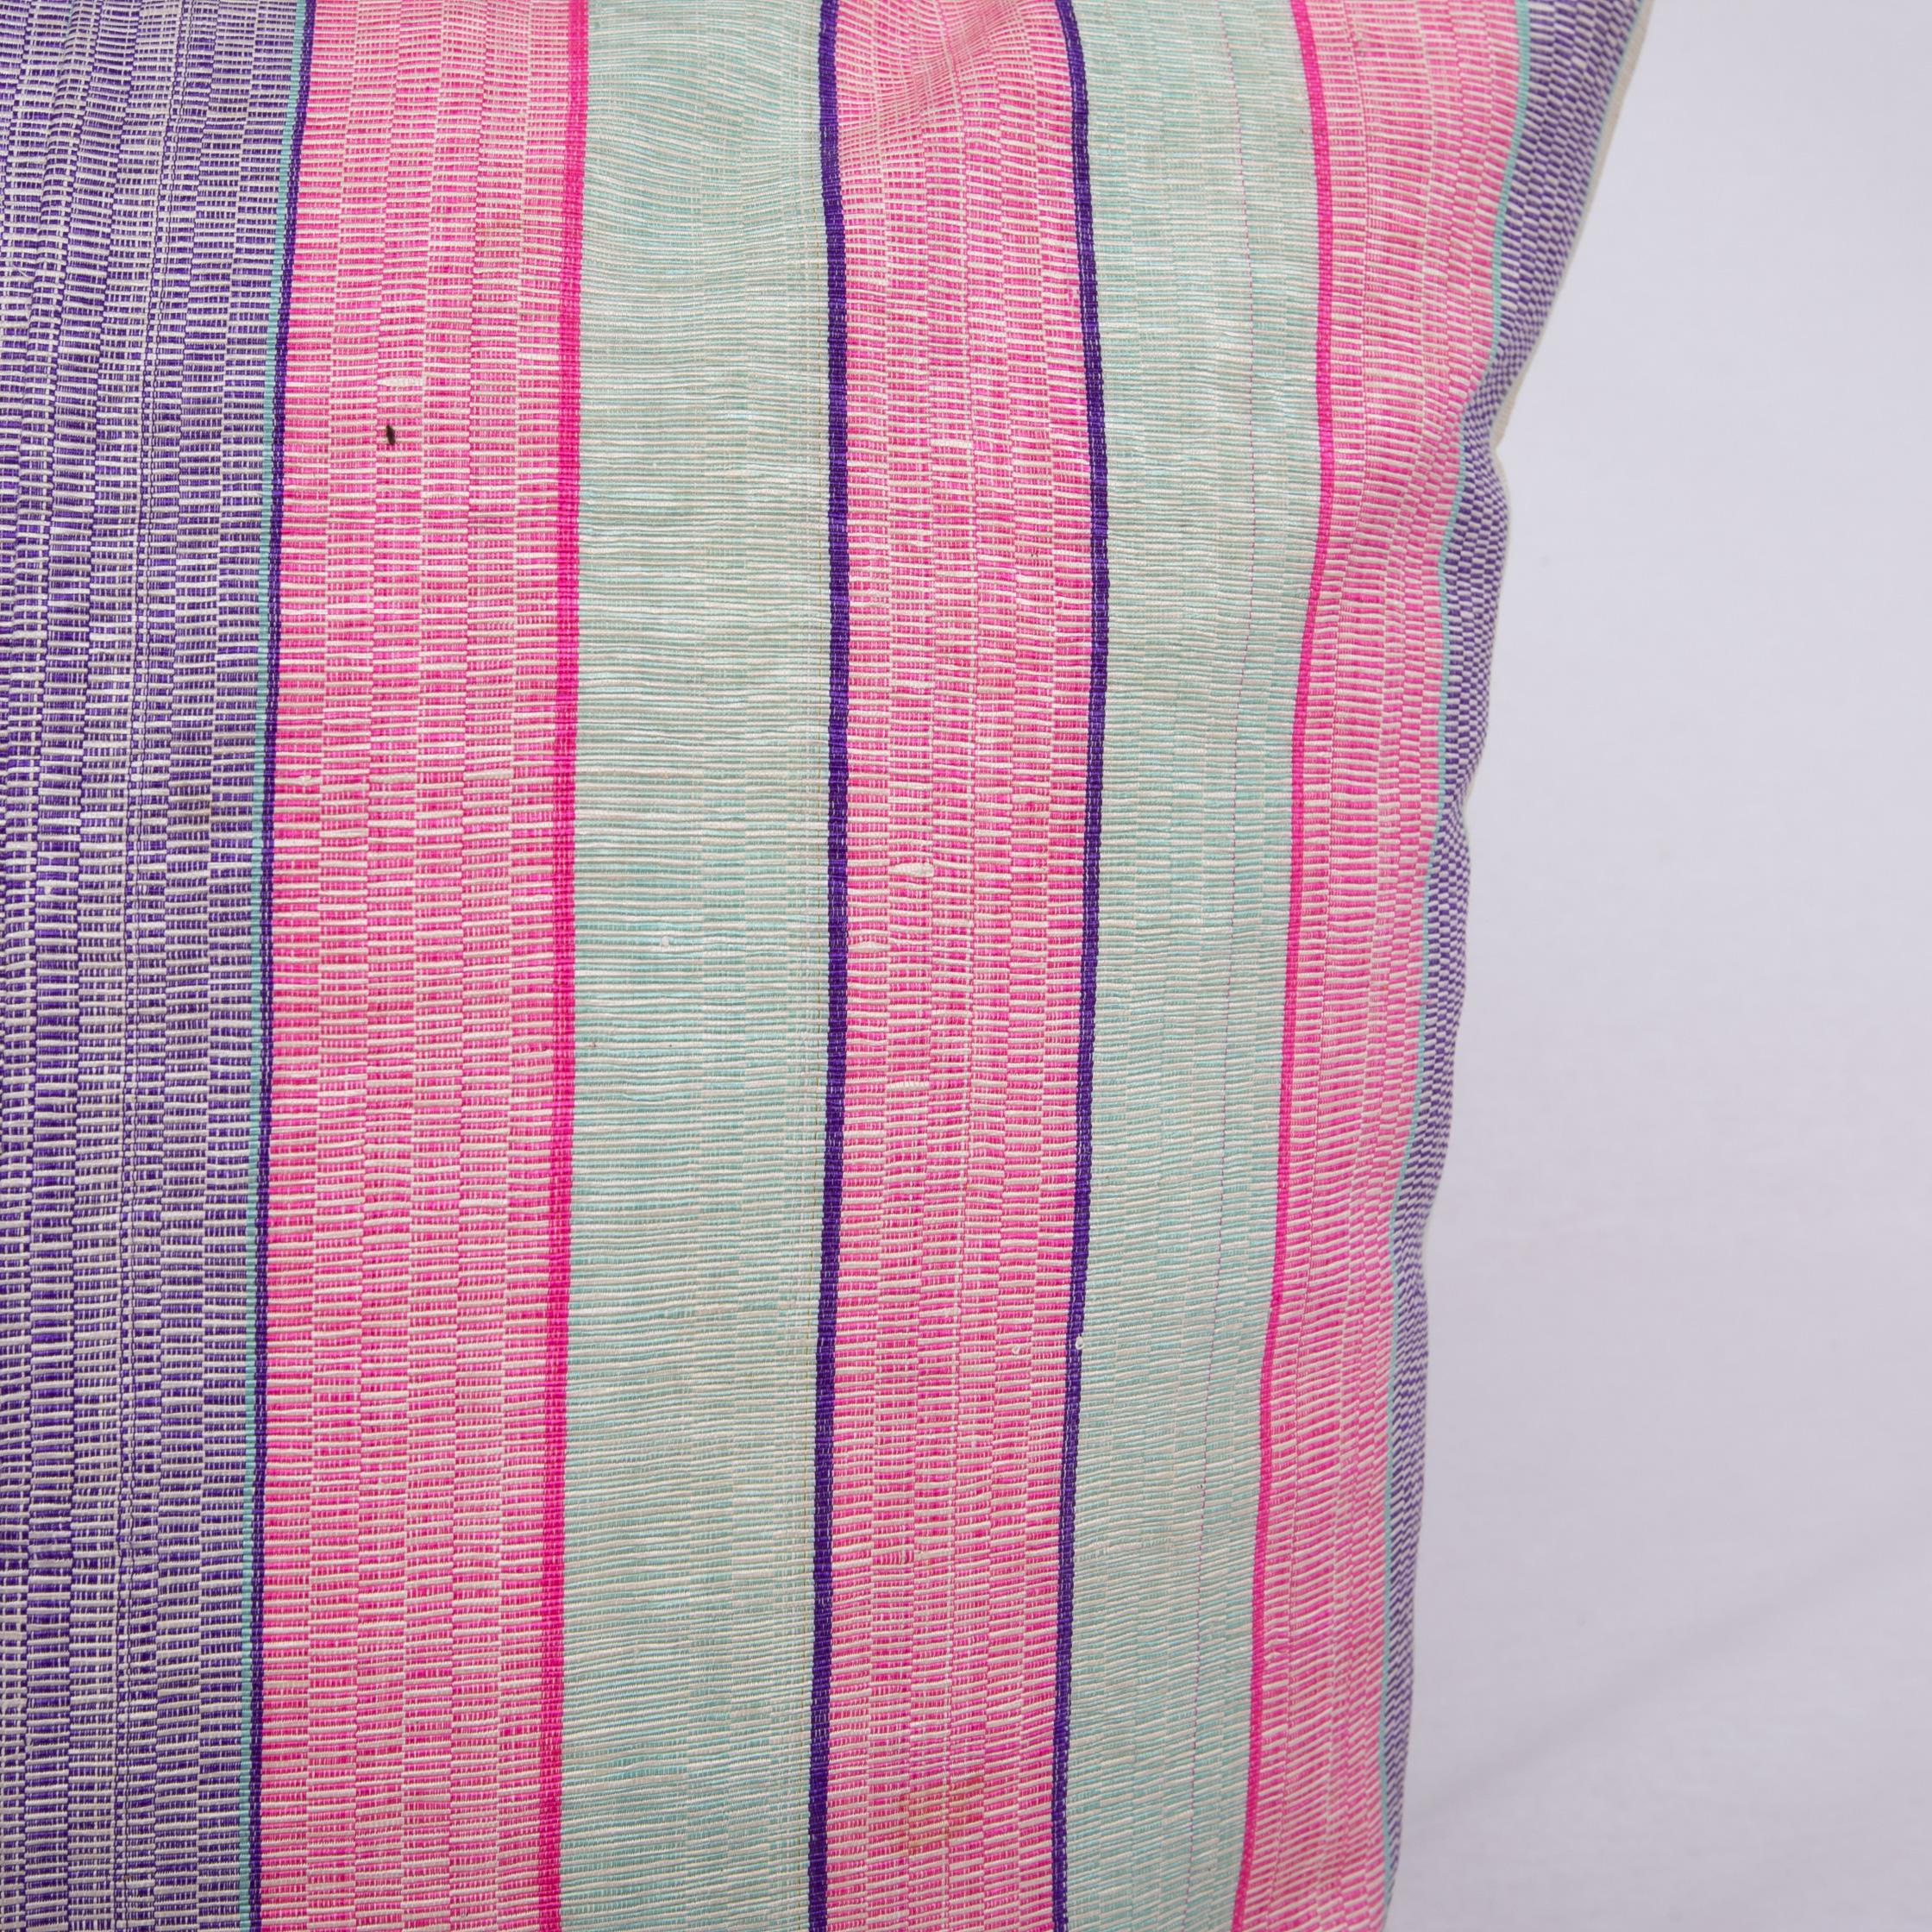 Hand-Woven Antique Silk Pillowcase/Cushion Cover Made from an Early 20th C. Uzbek Silk